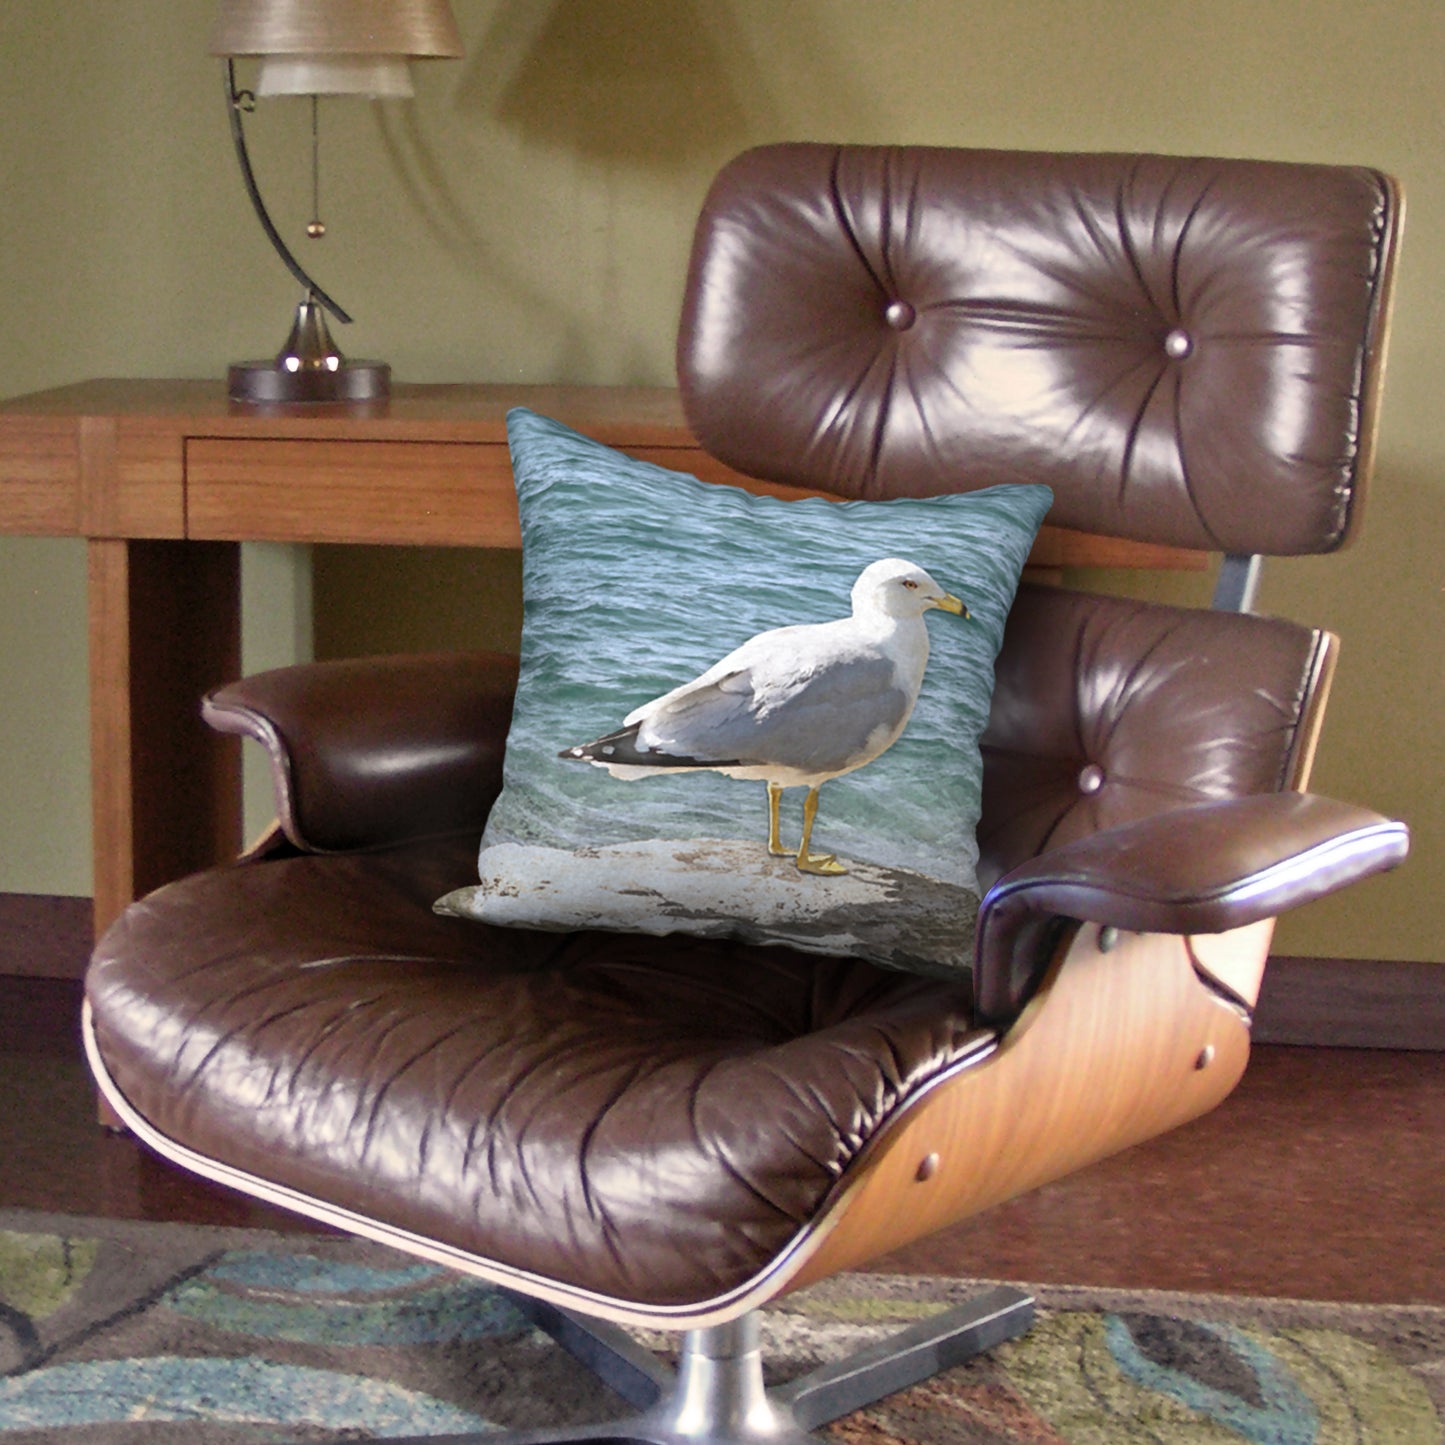 Seagull on a Rock Designer Pillow, 18"x18"